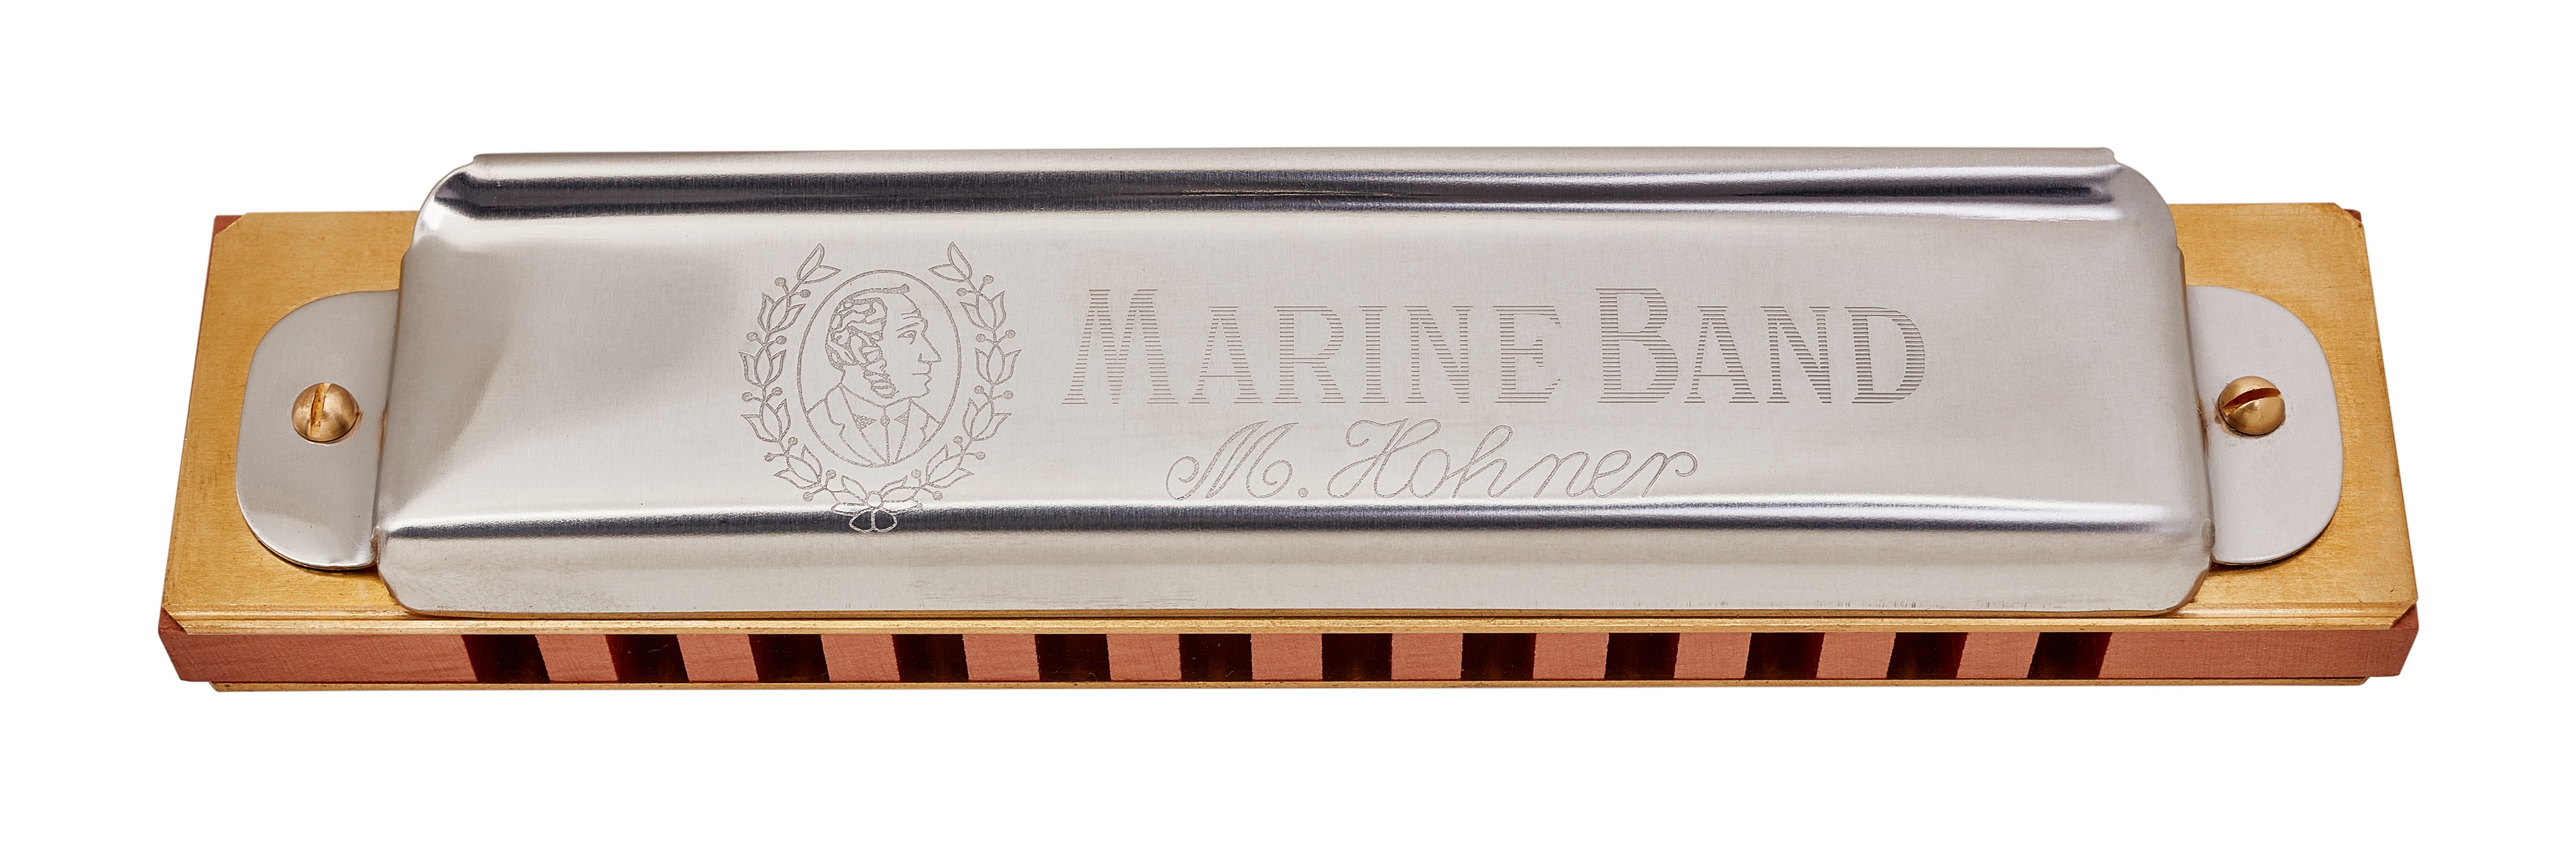 Hohner Marine Band 364/24 Soloist